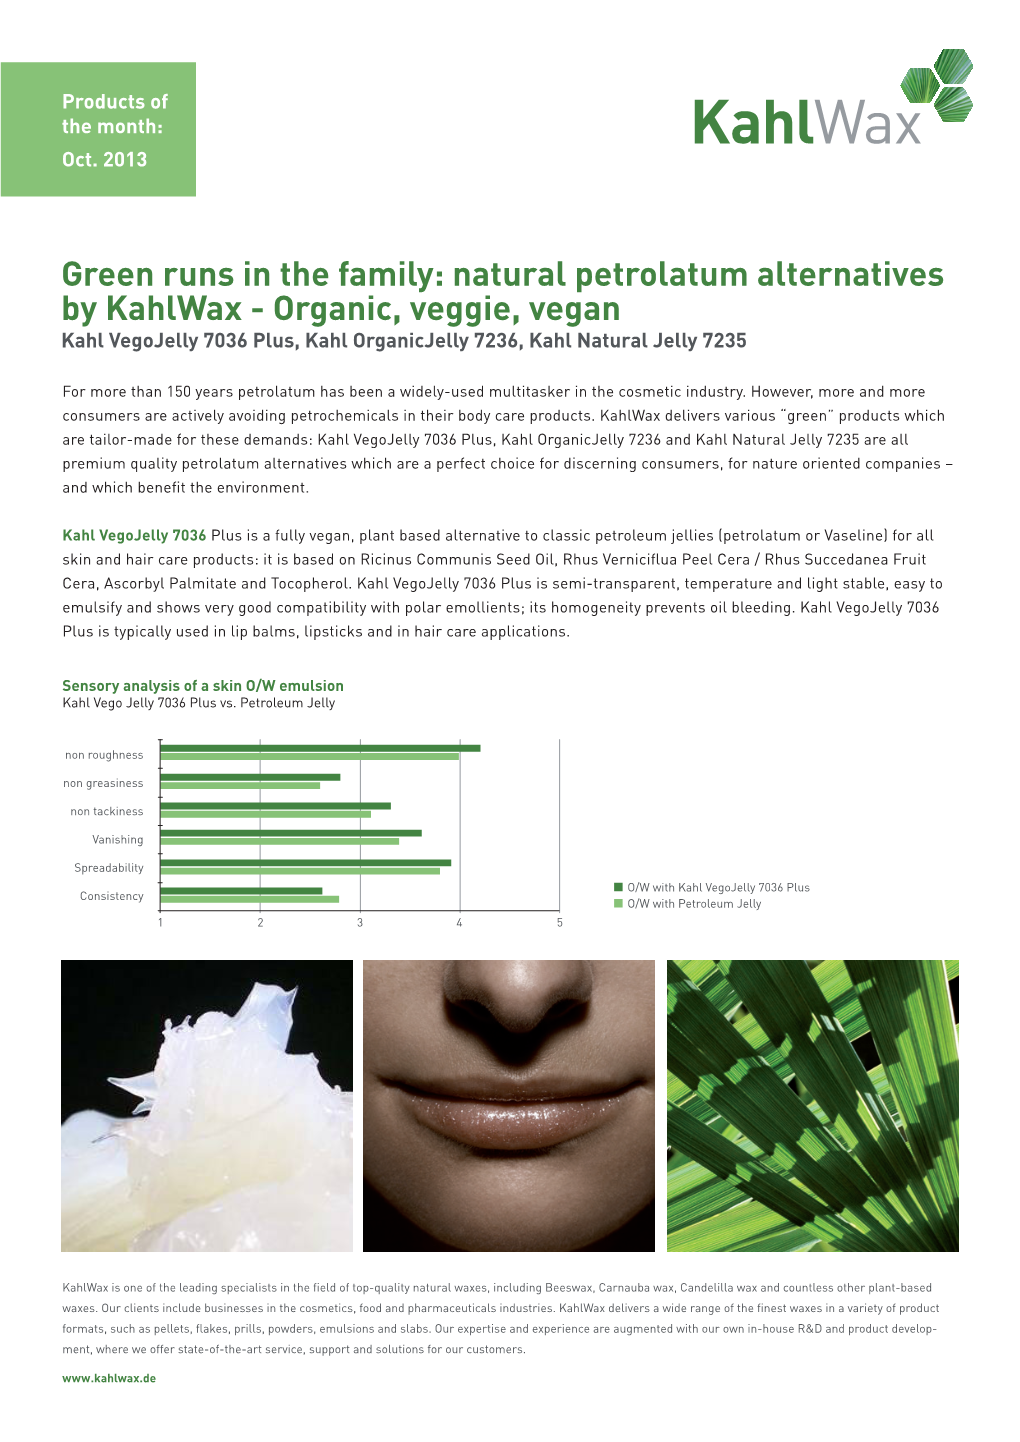 Green Runs in the Family: Natural Petrolatum Alternatives by Kahlwax